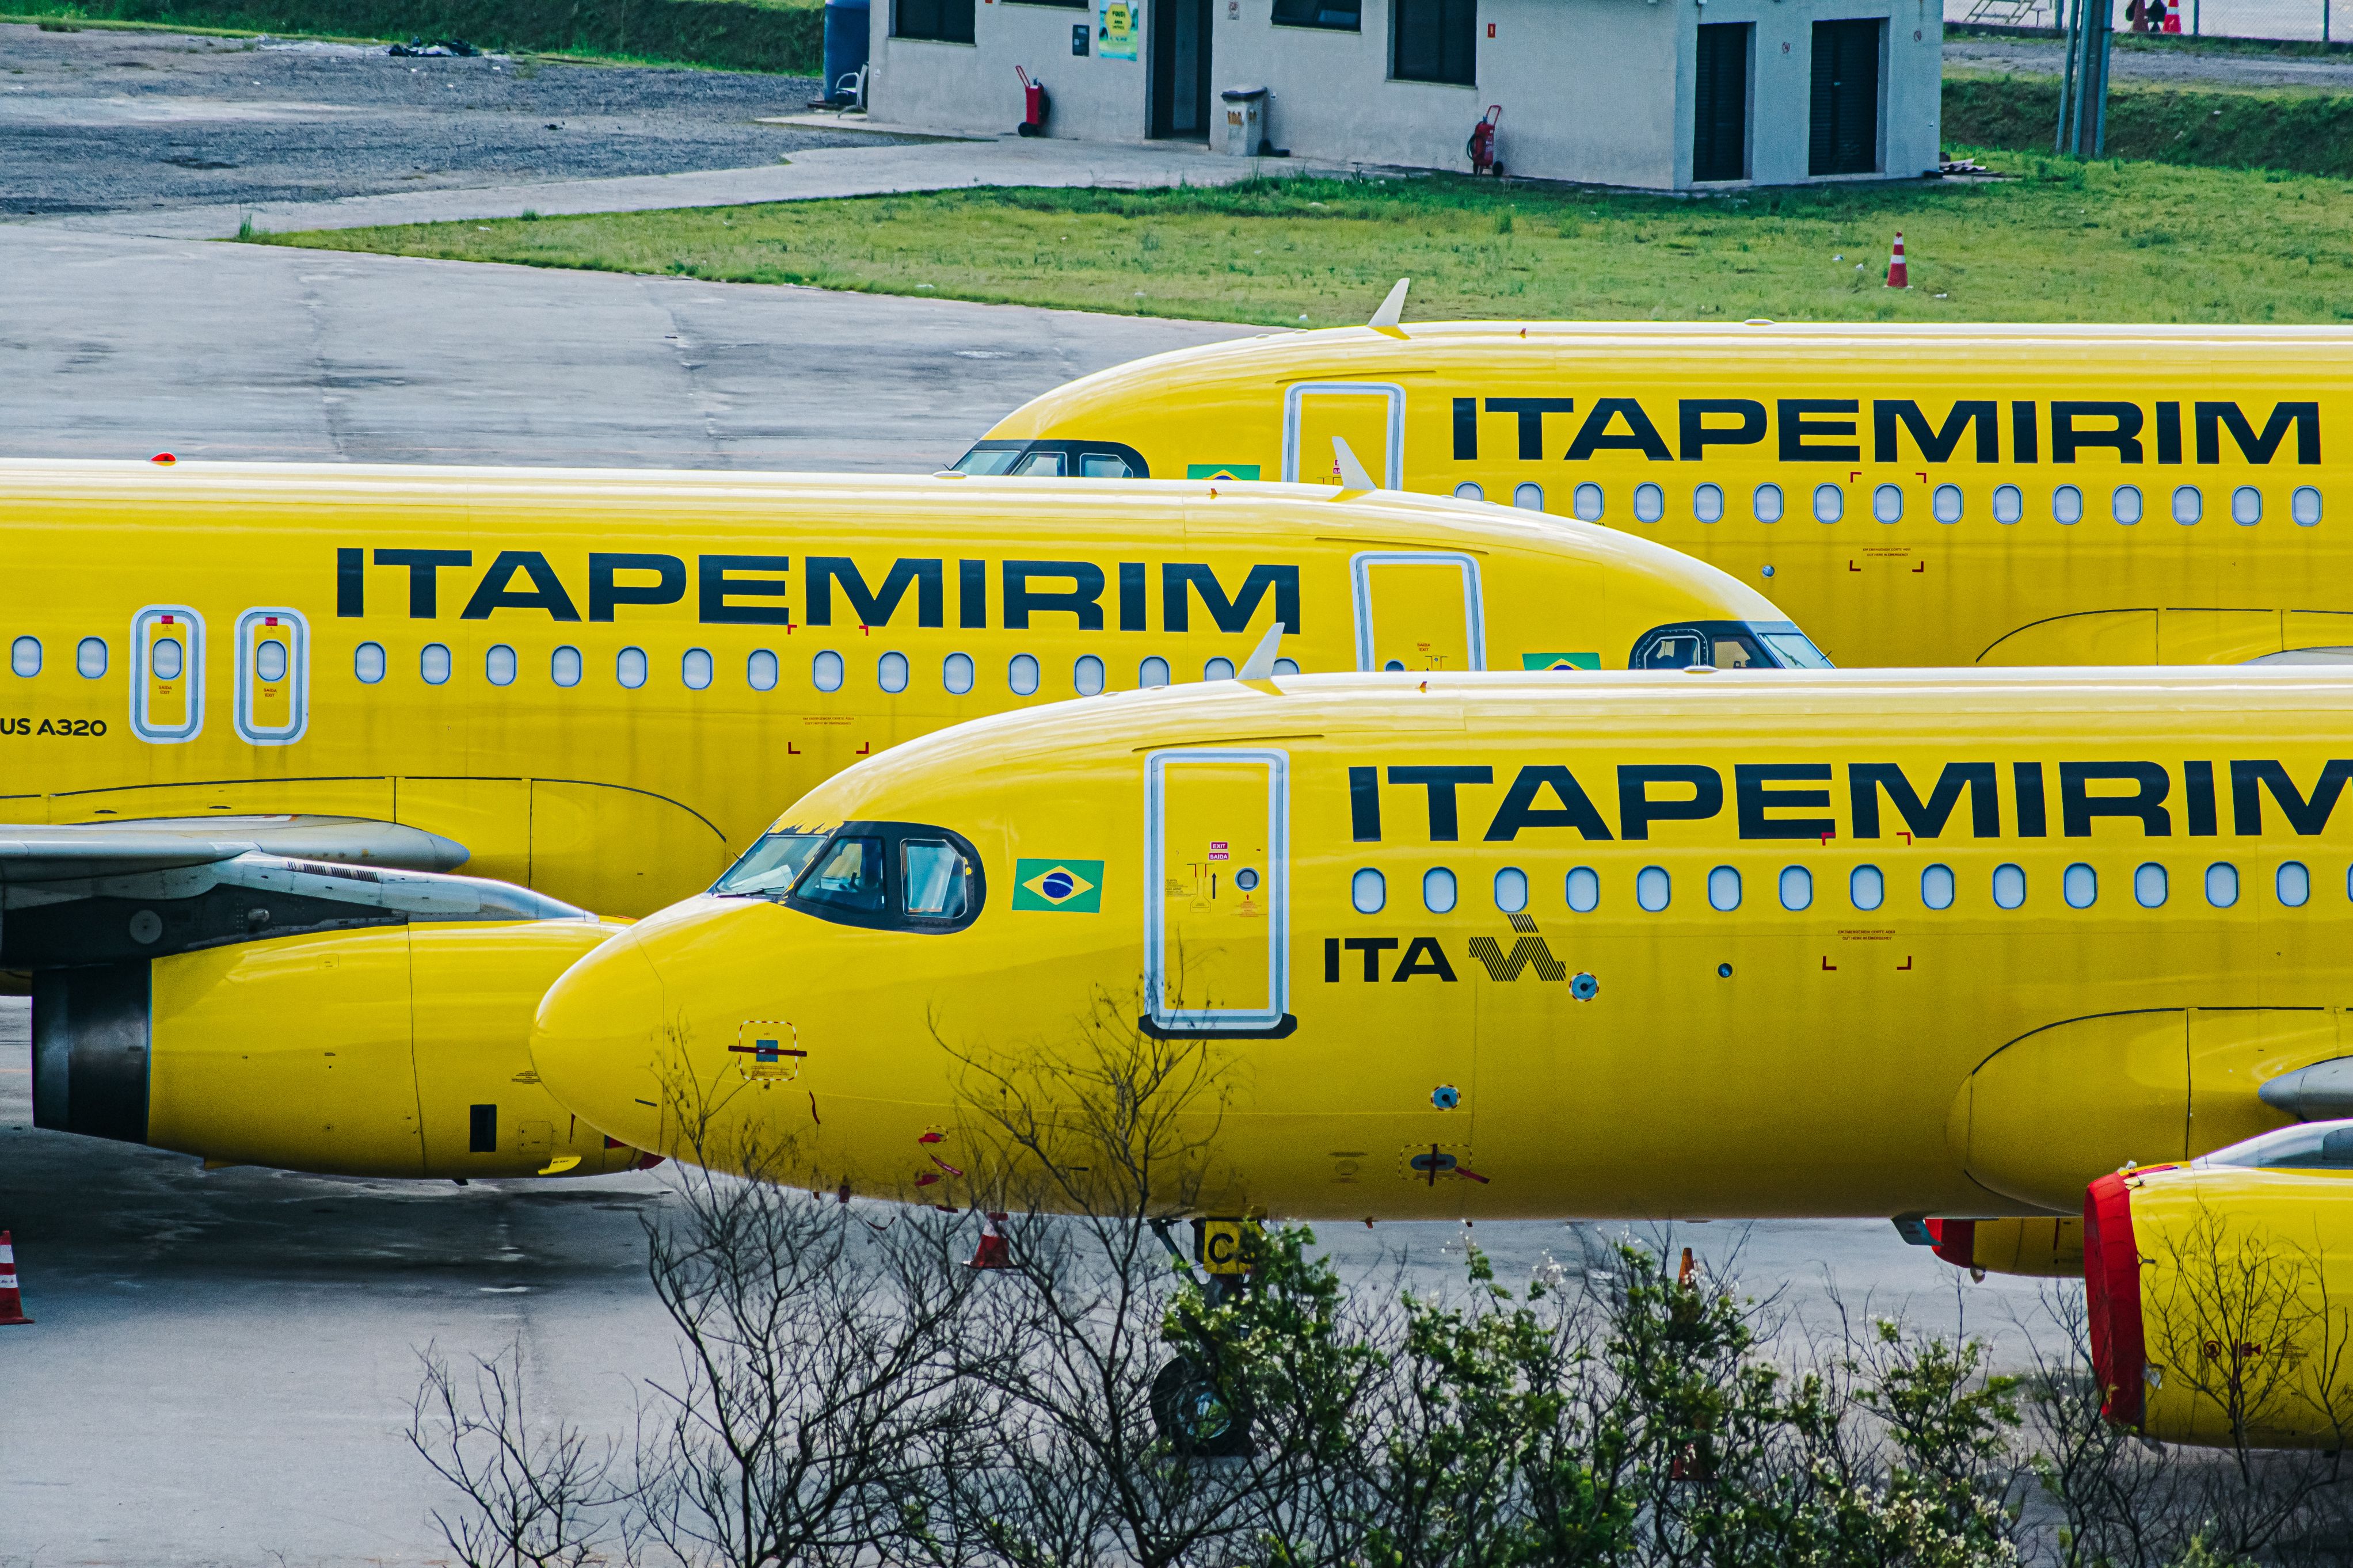 Several Itapemirim Transportes Aereos aircraft